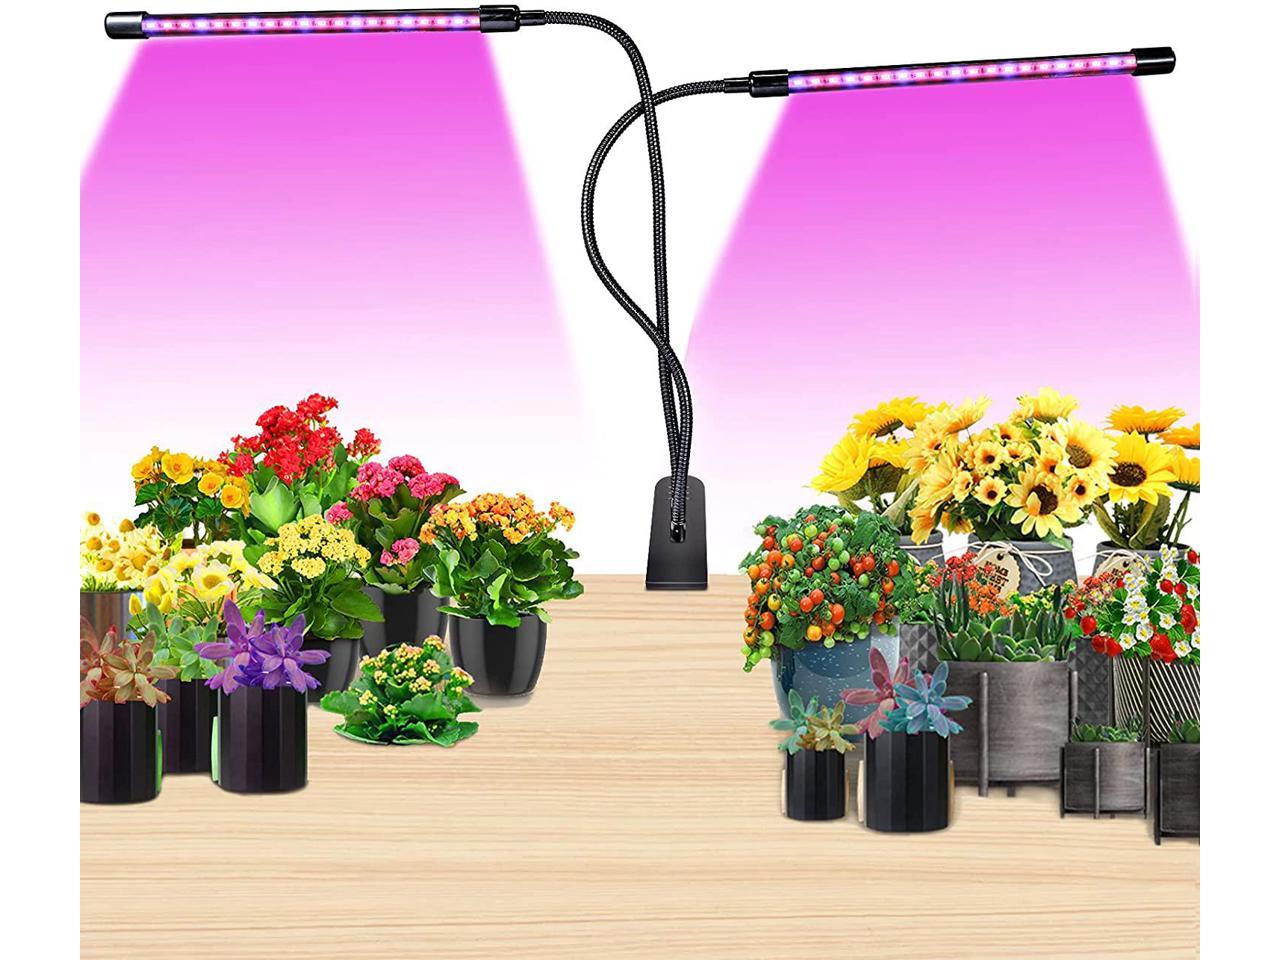 LED Grow Light Hydroponic Full Spectrum Indoor Veg Flower Plant Lamp Dimmable 